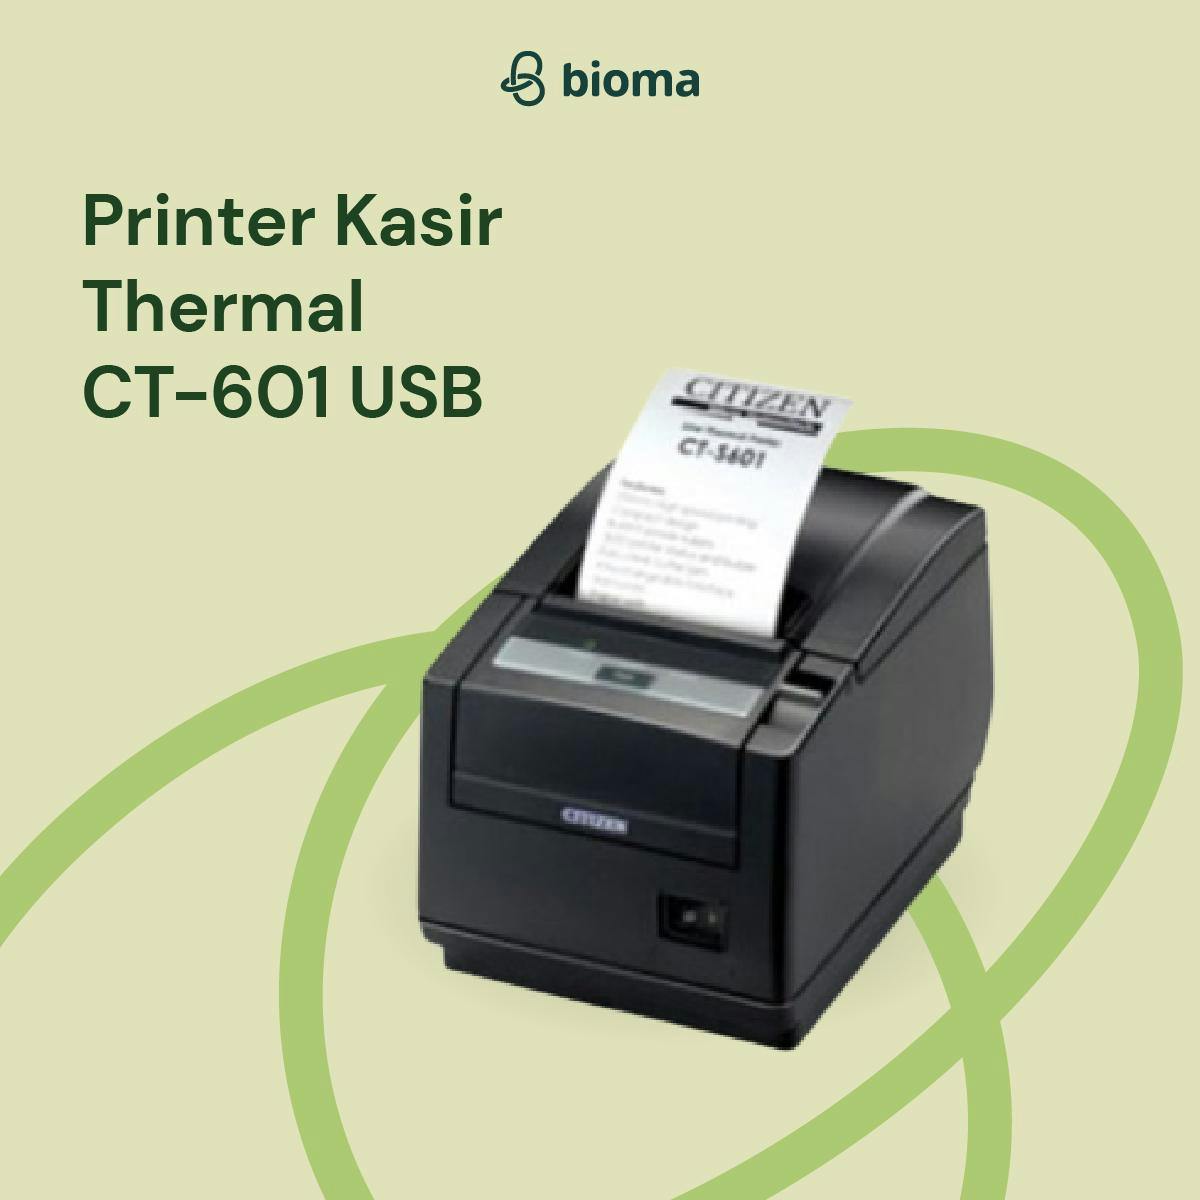 Printer Kasir Thermal CT-601 USB